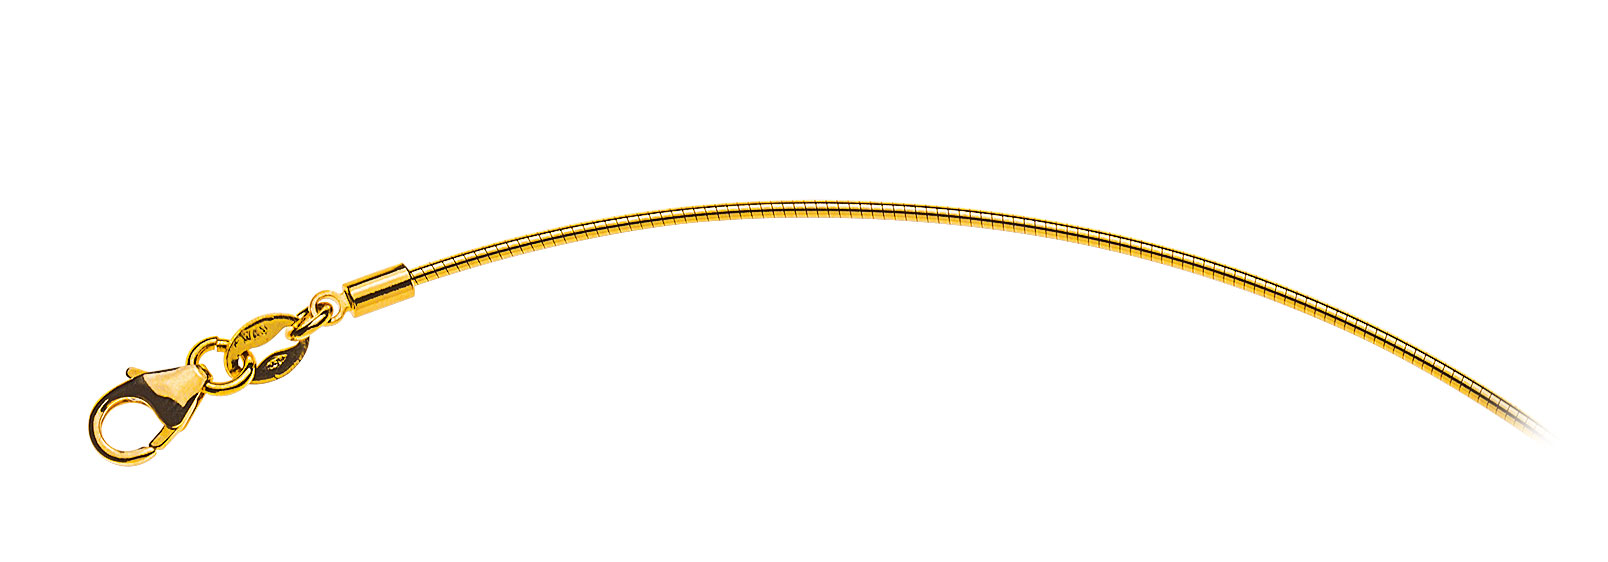 AURONOS Prestige Necklace yellow gold 18K omega chain 50cm 1.0mm